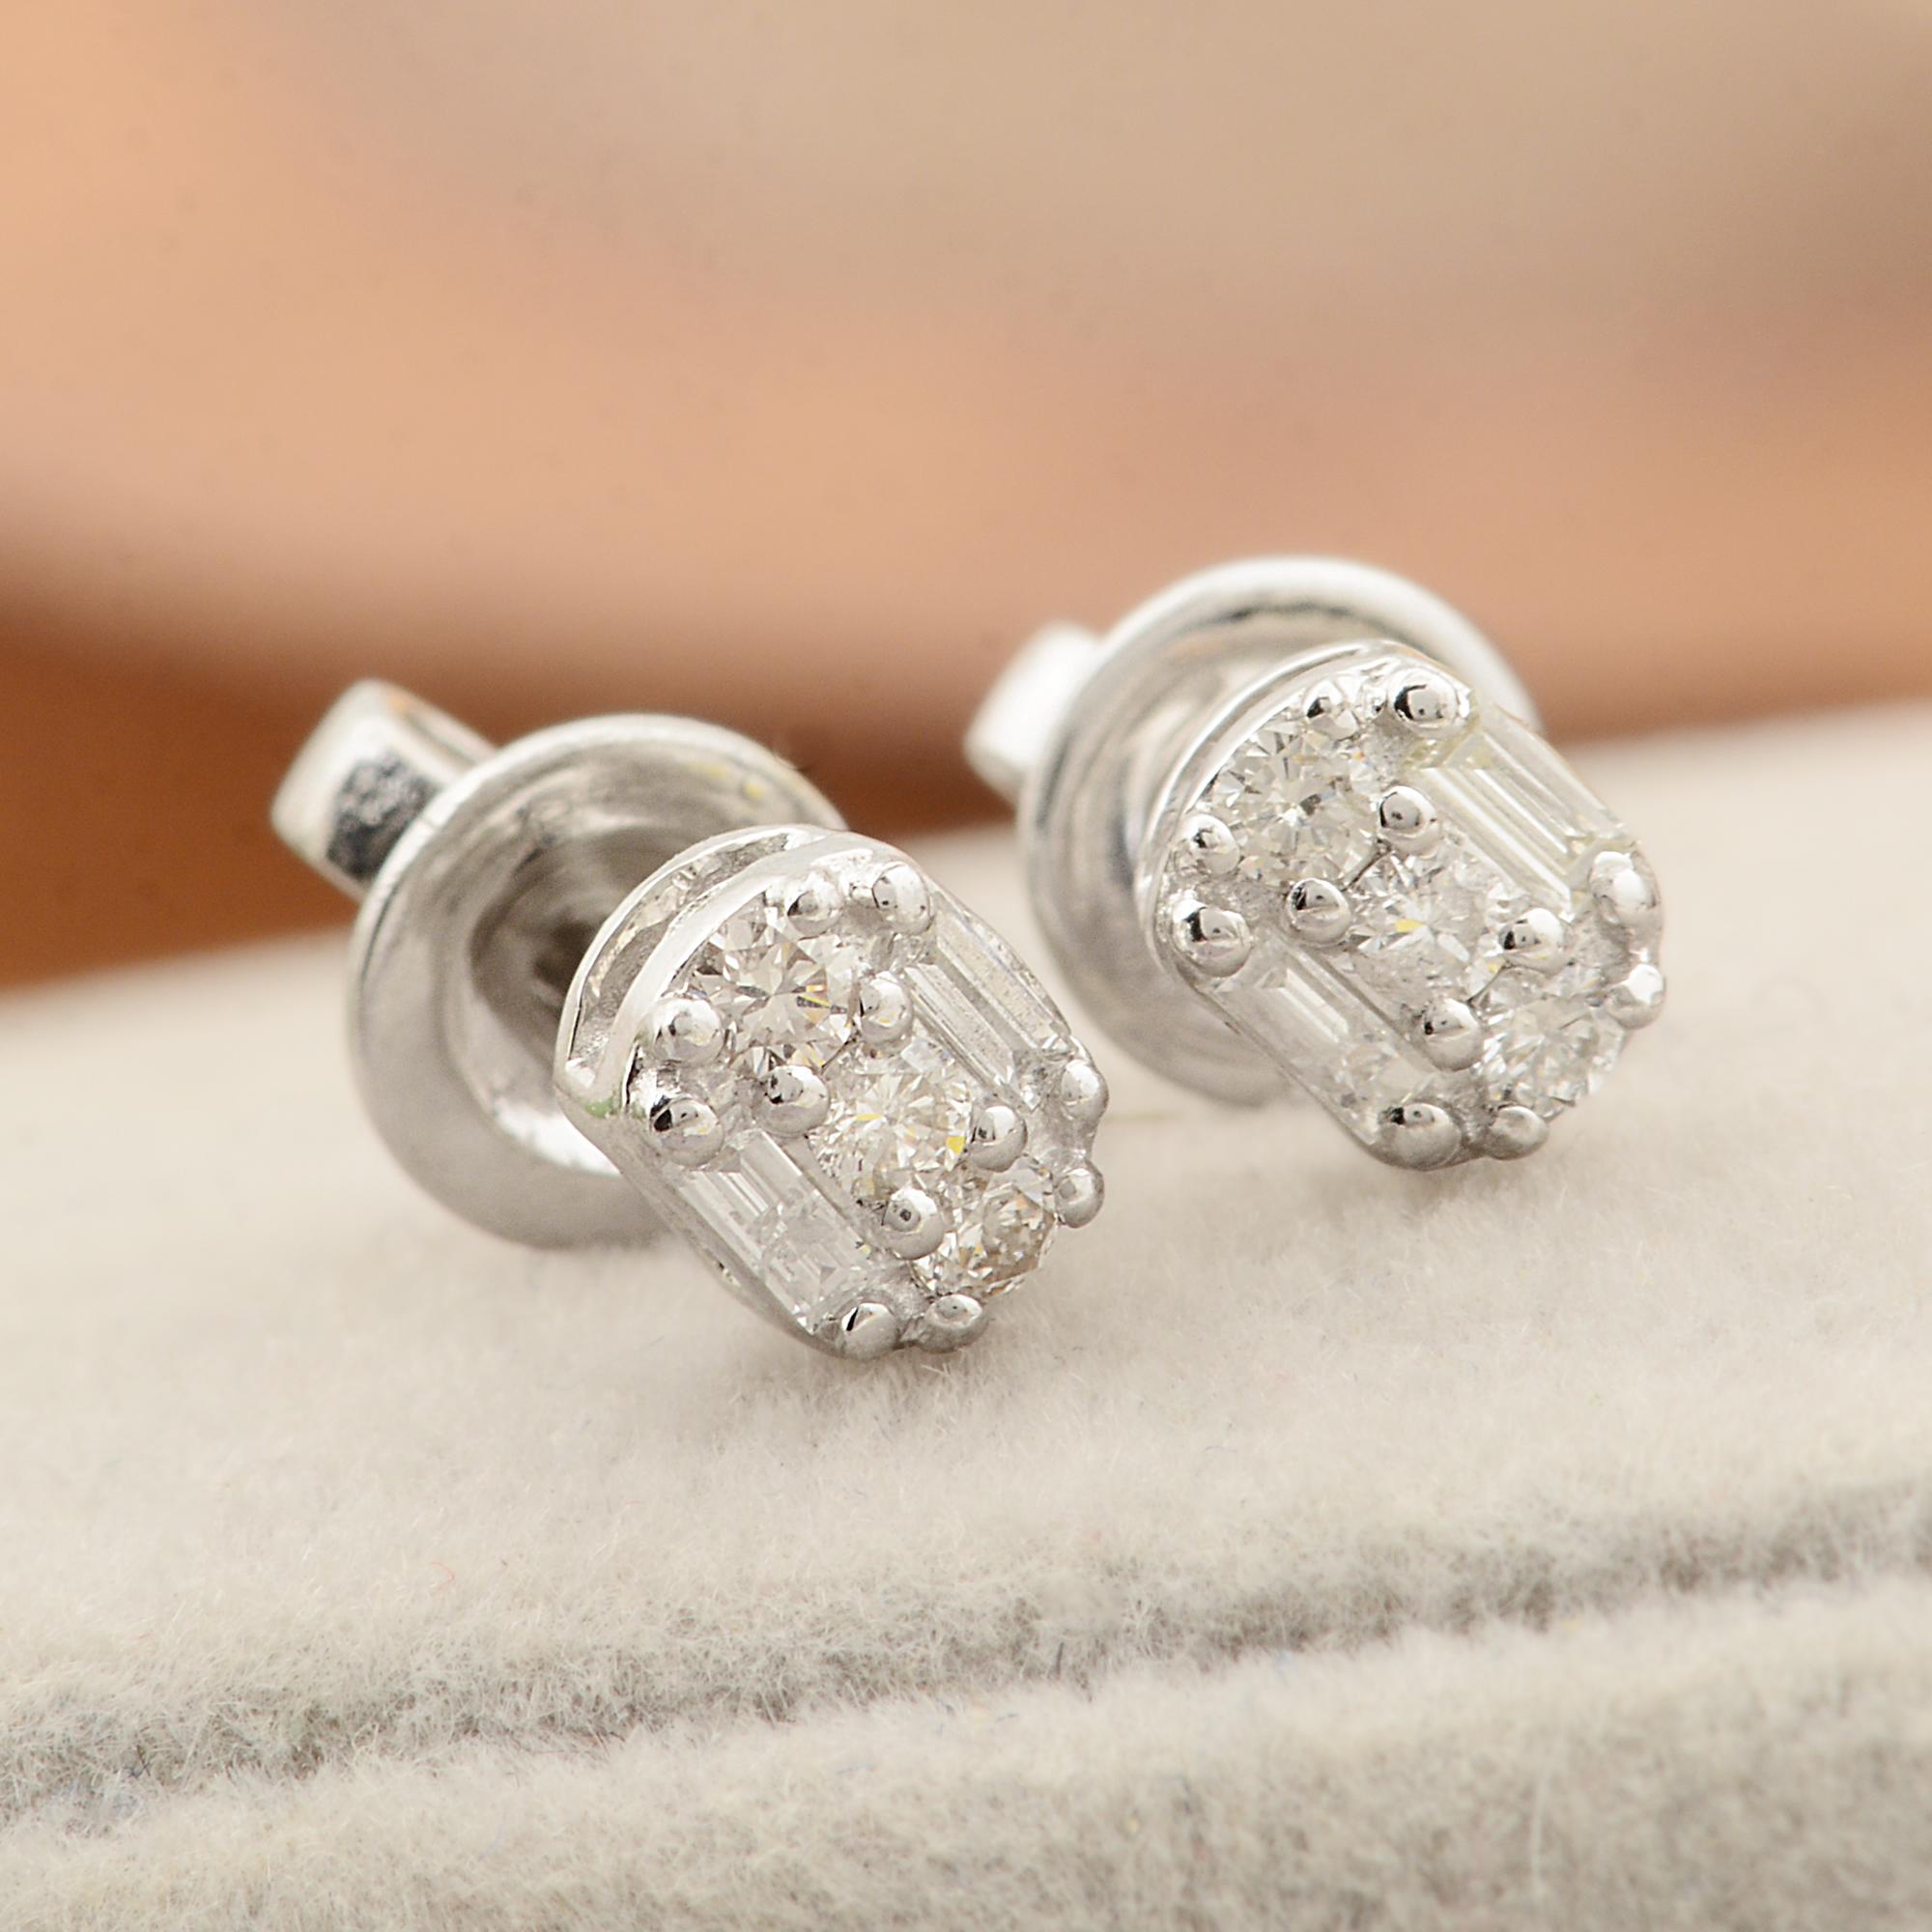 0.2 ct diamond earrings